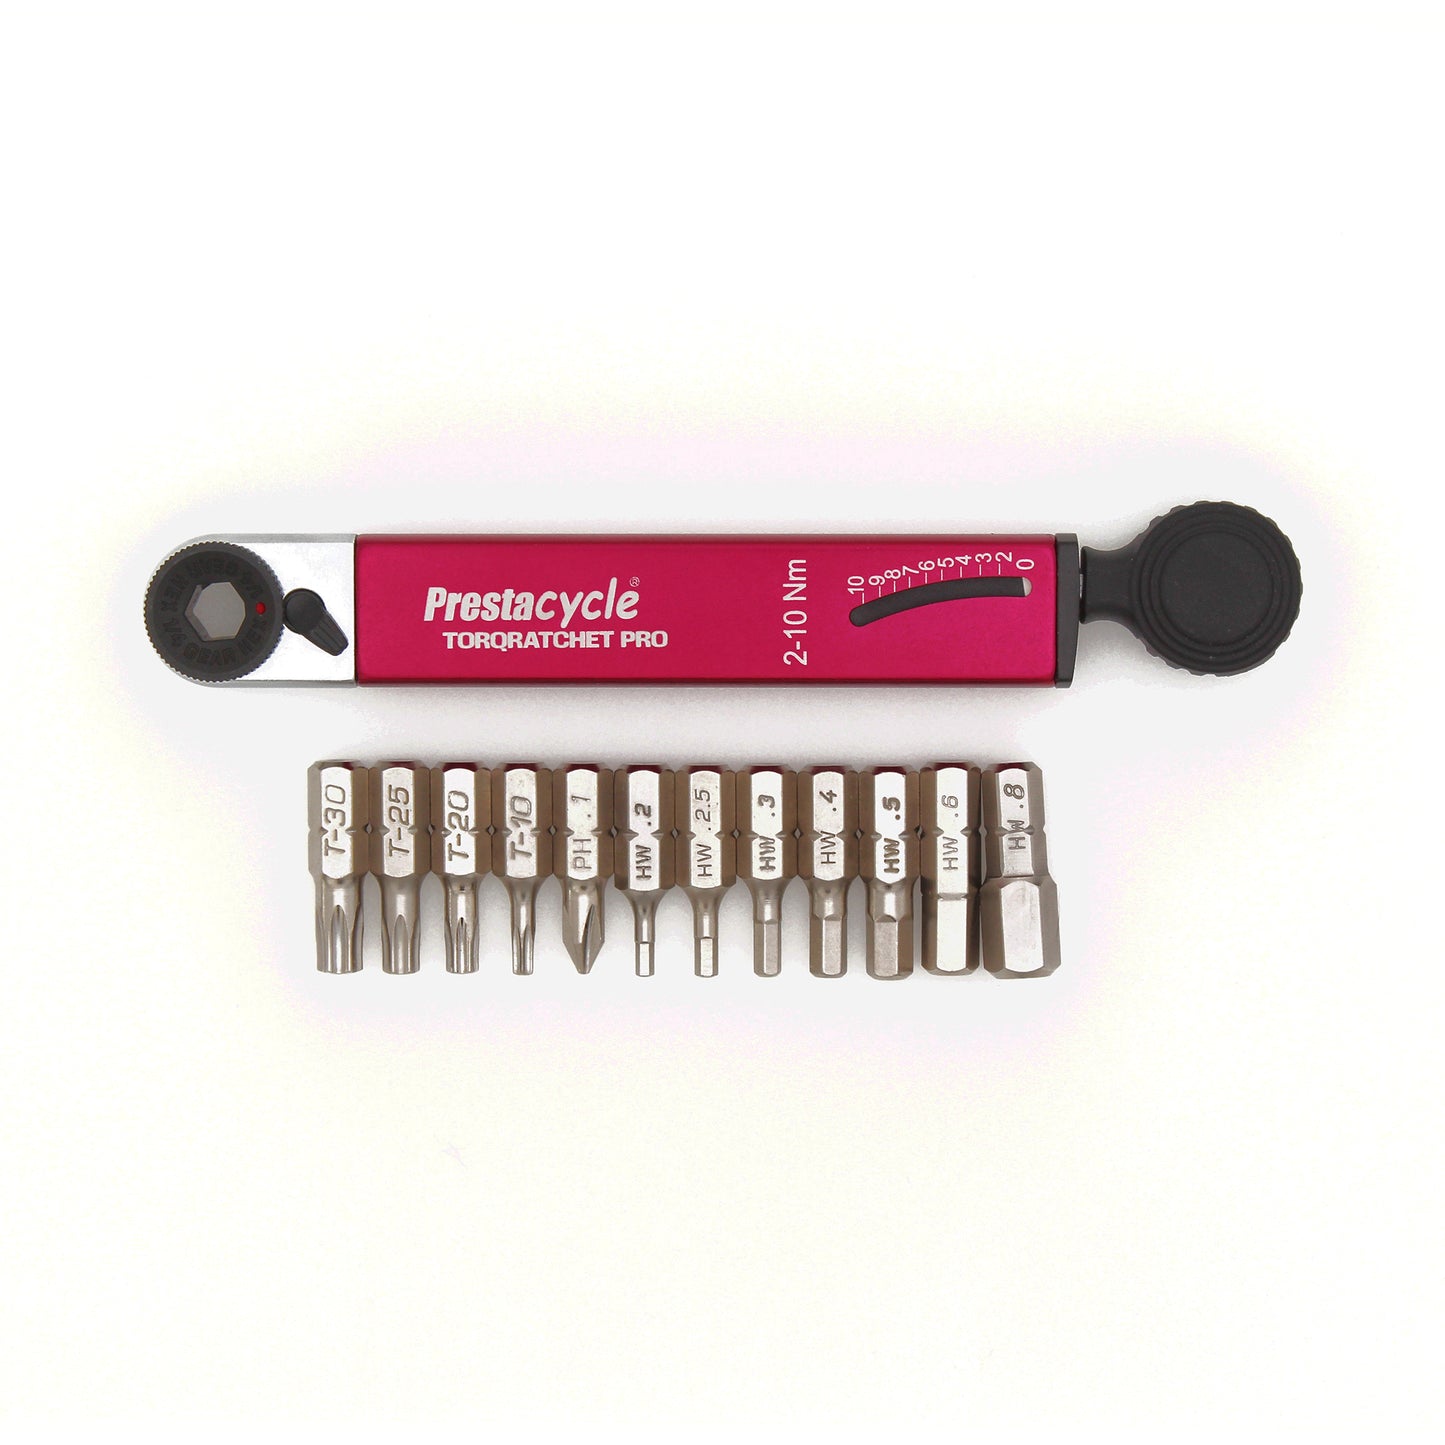 Prestacycle TorqRatchet PRO Wallet - Pro Pocket Multi-tool and 2~10Nm Torque Ratchet